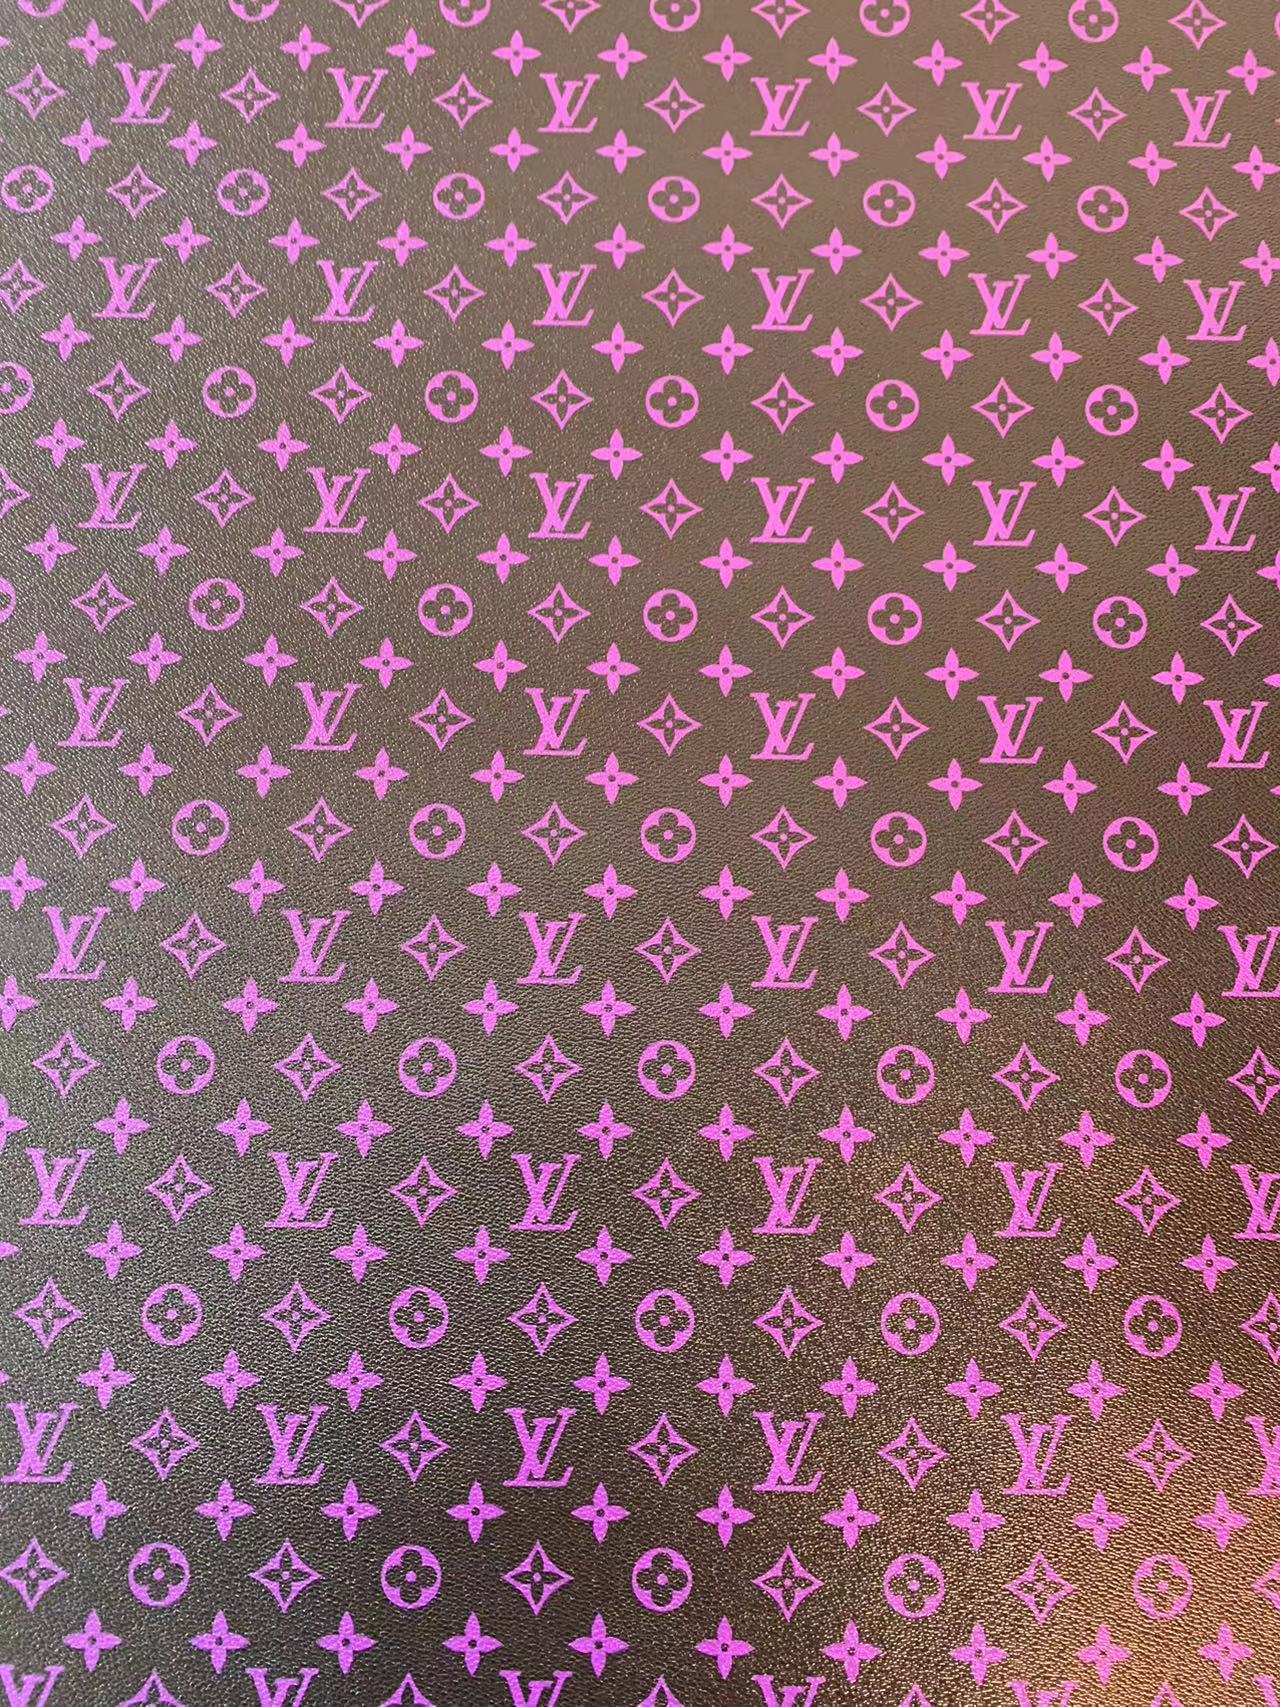 Purple lv wallpapaer  Louis vuitton iphone wallpaper, Bape wallpaper  iphone, Pretty wallpaper iphone